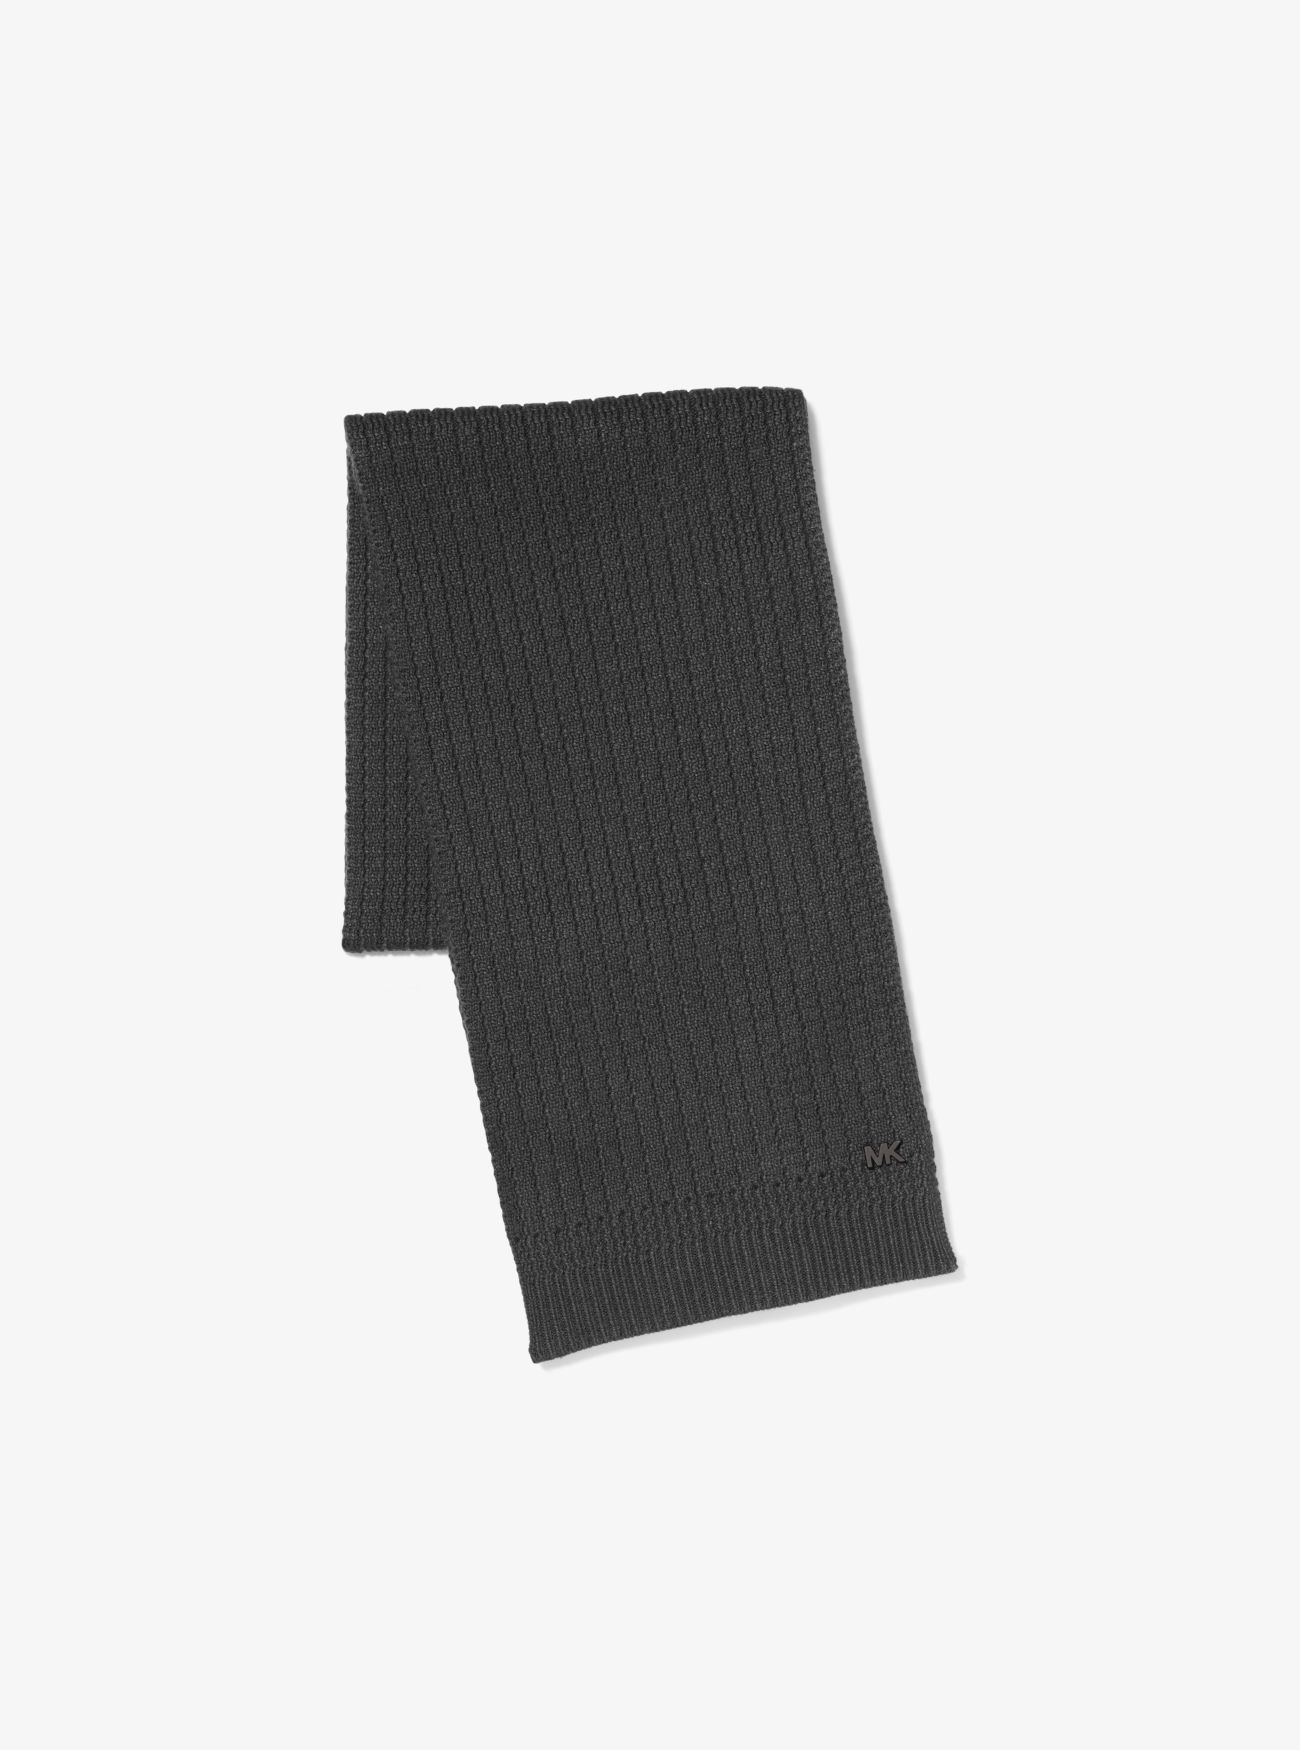 MK Textured Knit Scarf - Grey - Michael Kors